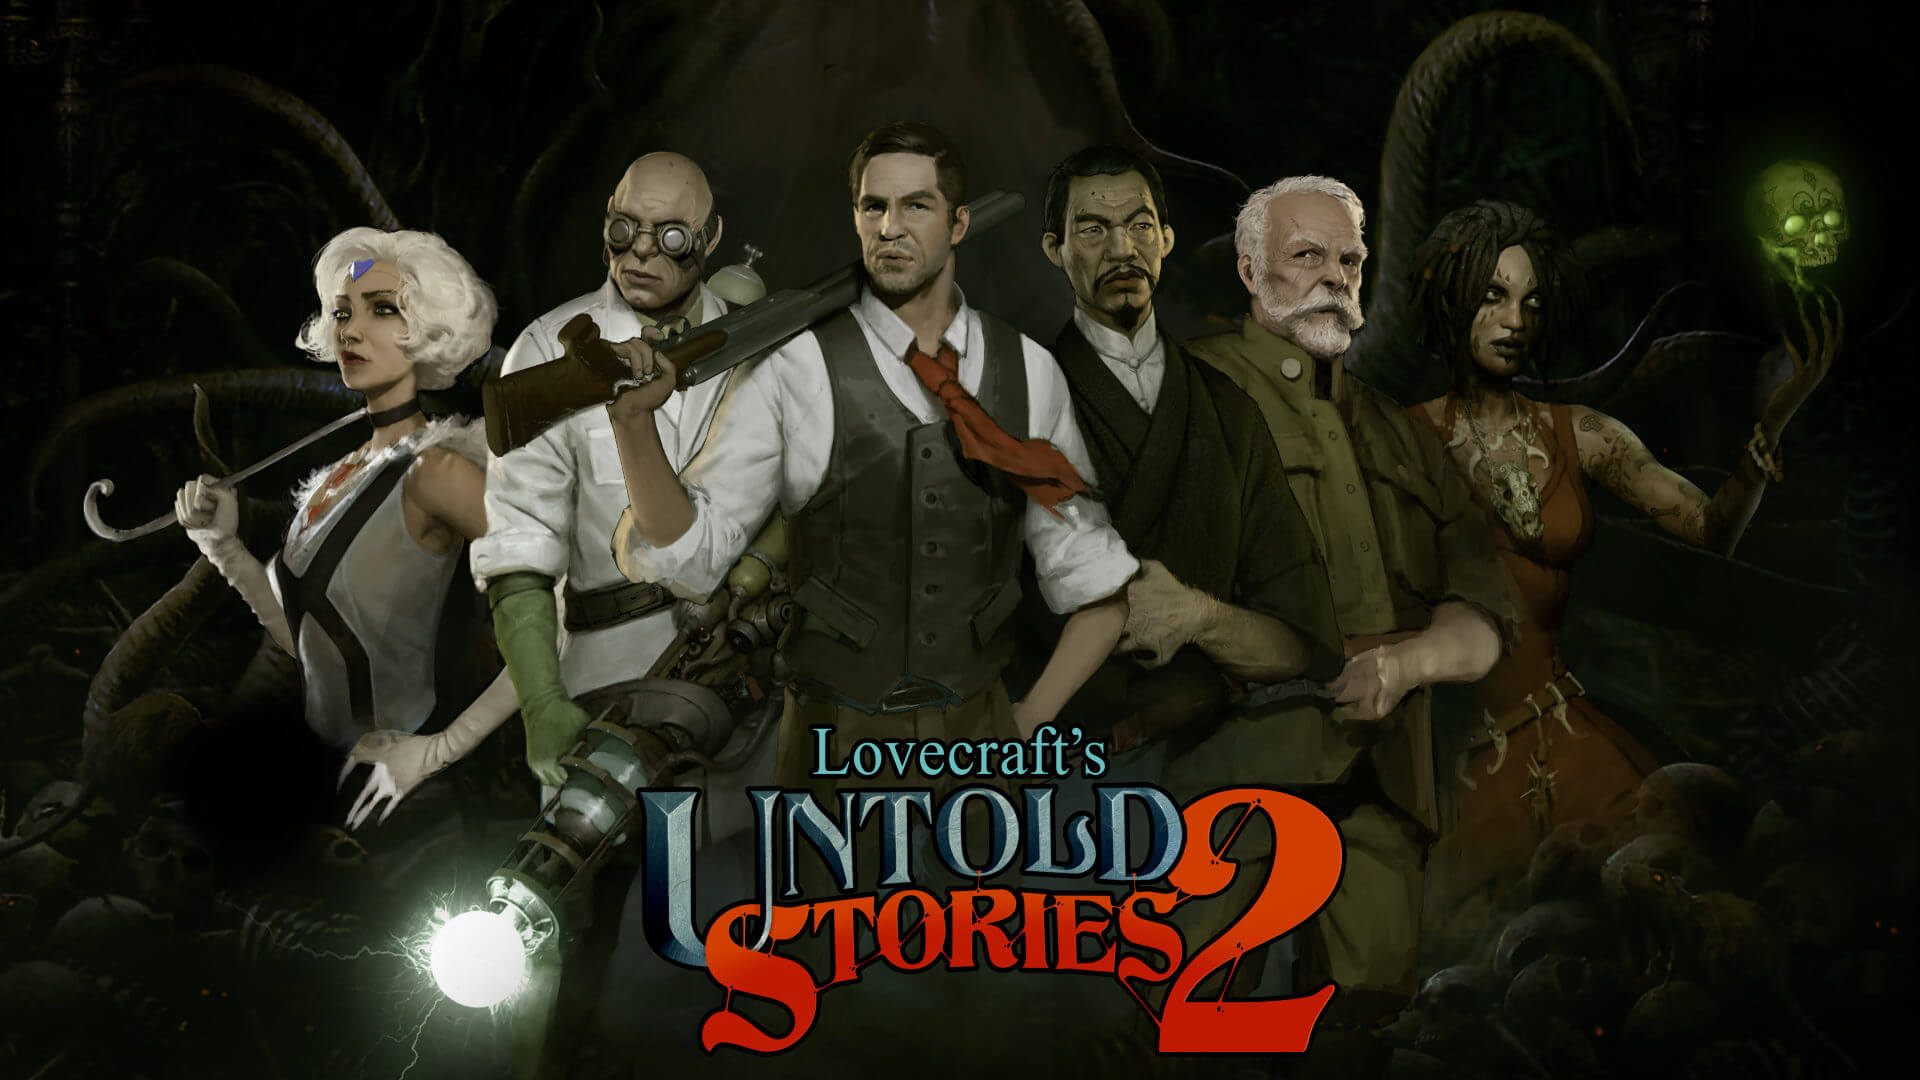 Lovecraft's Untold Stories 2 Characters Key Art